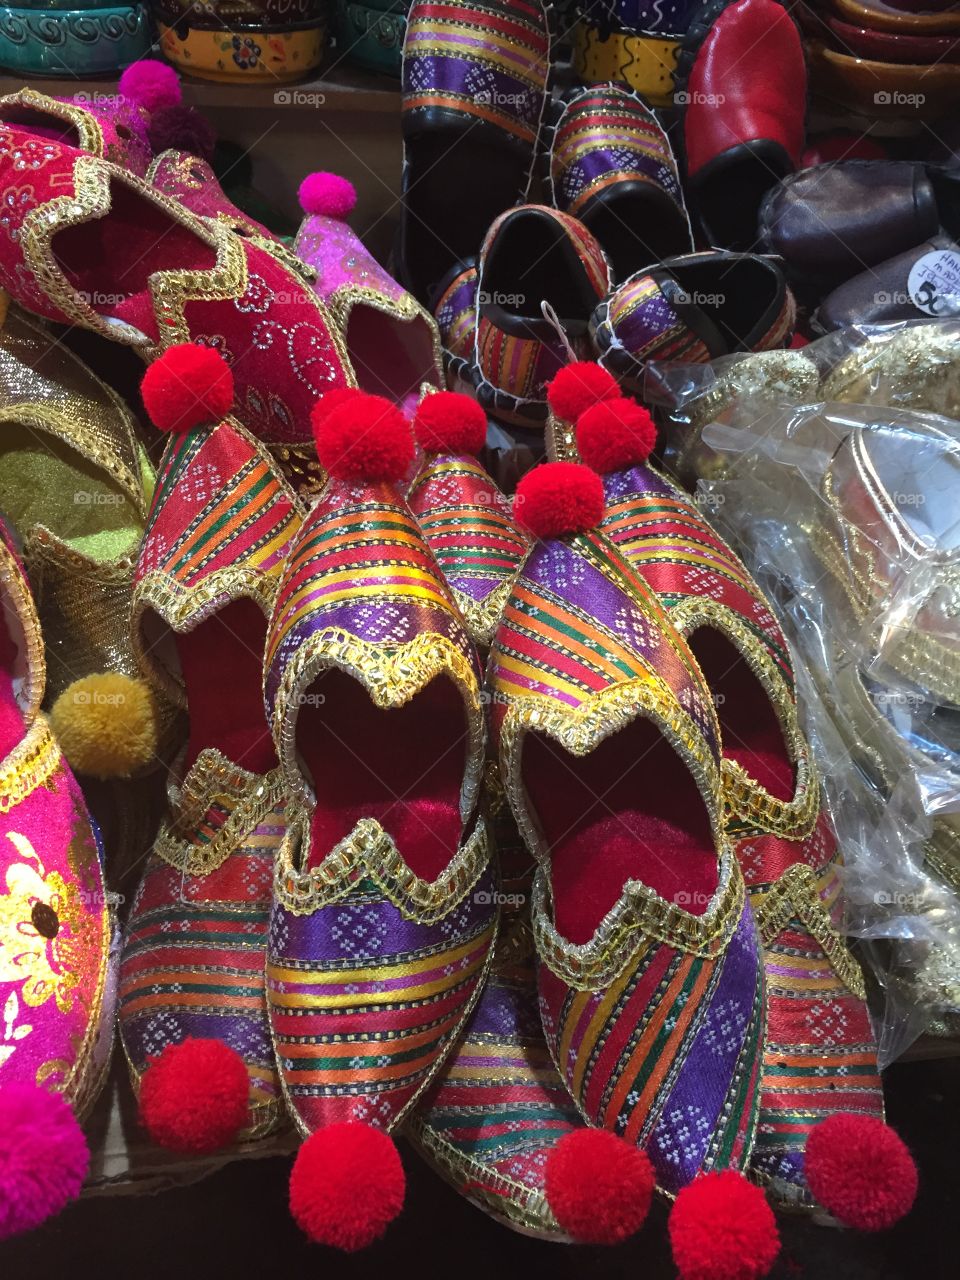 Turkish shoes